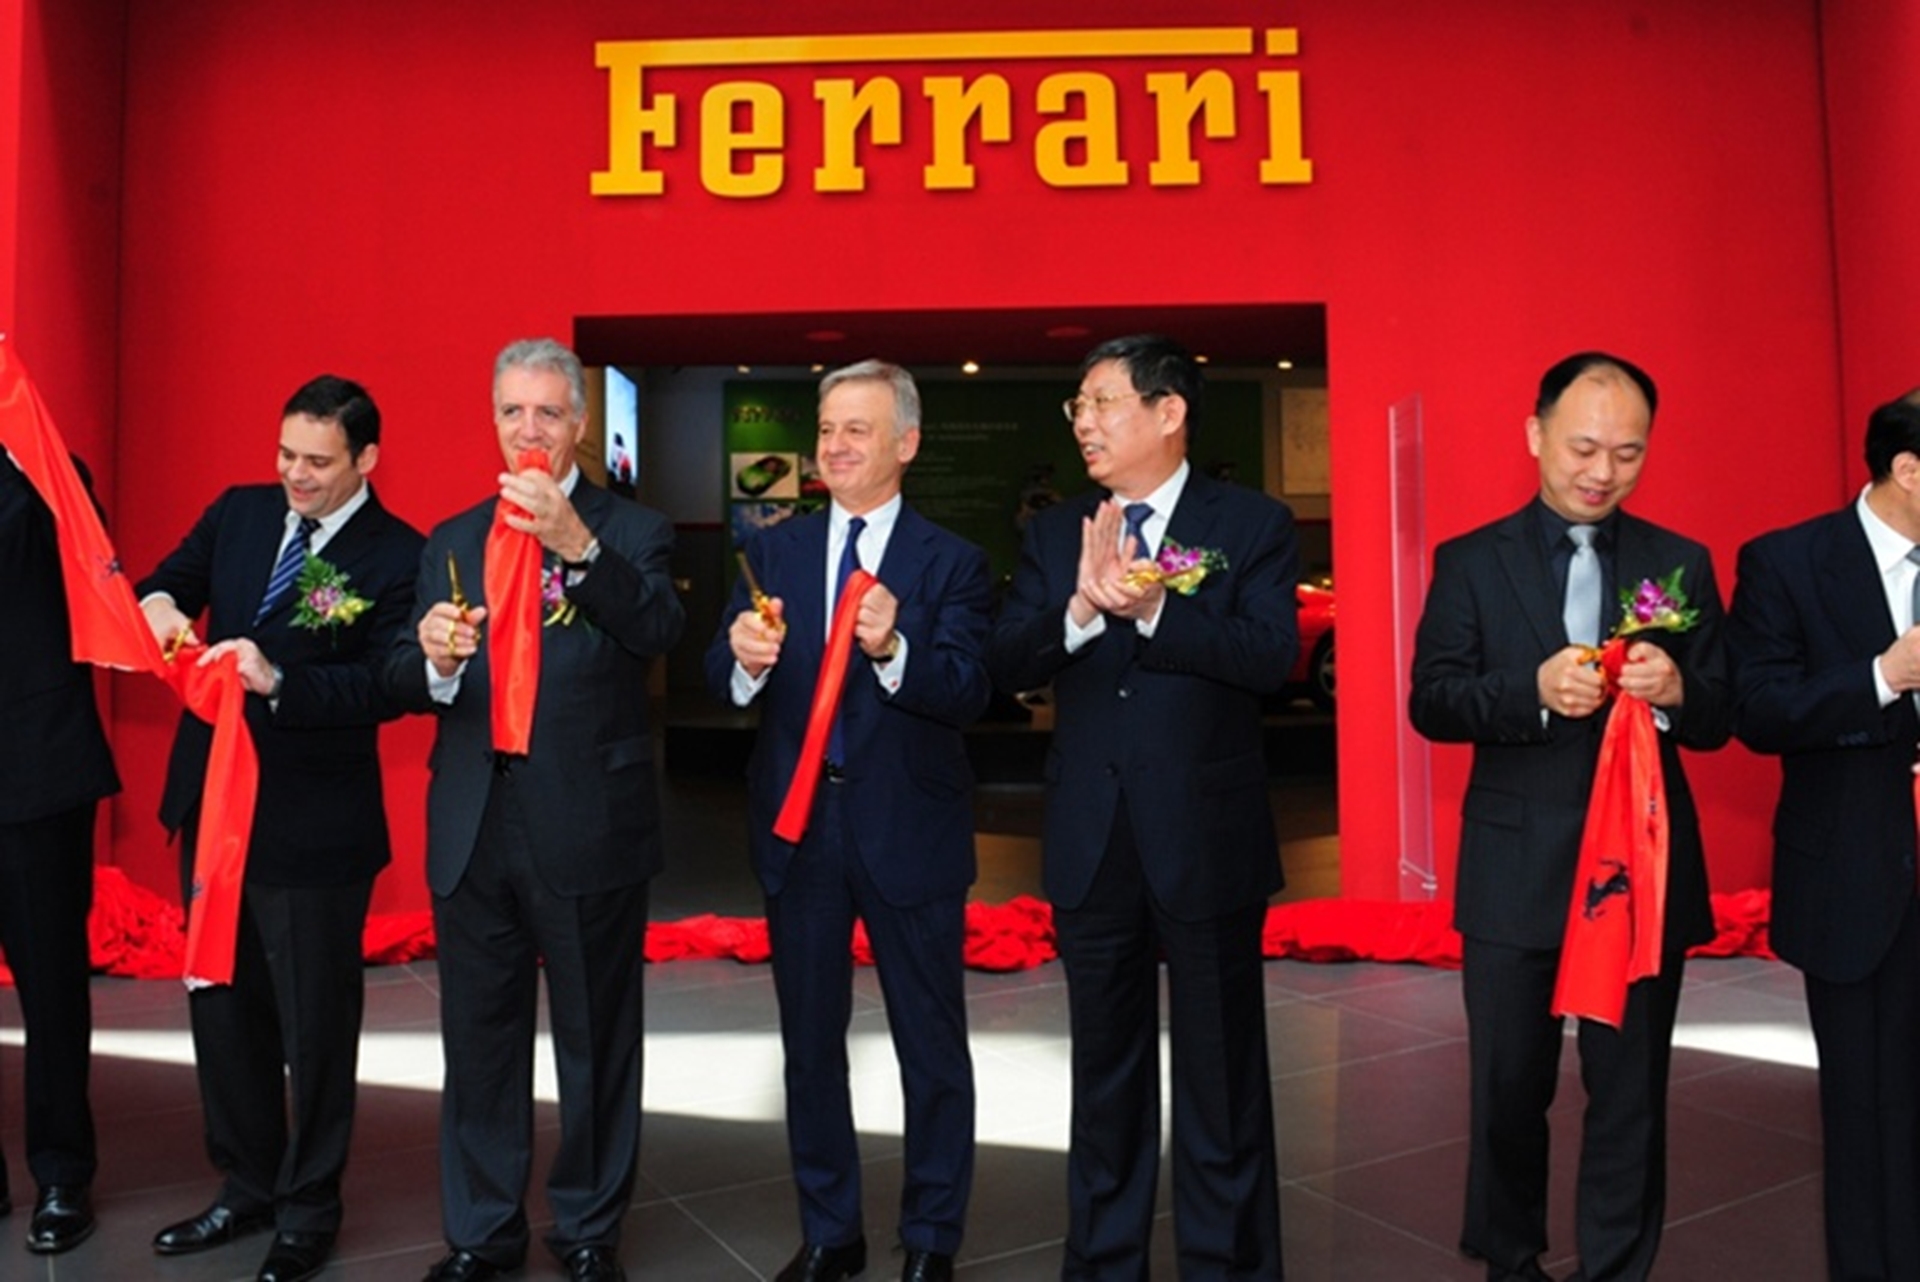 THE FERRARI MYTH EXHIBITION OFFICIALLY OPENED AT ITALIAN CENTER AT SHANGHAI EXPO PARK